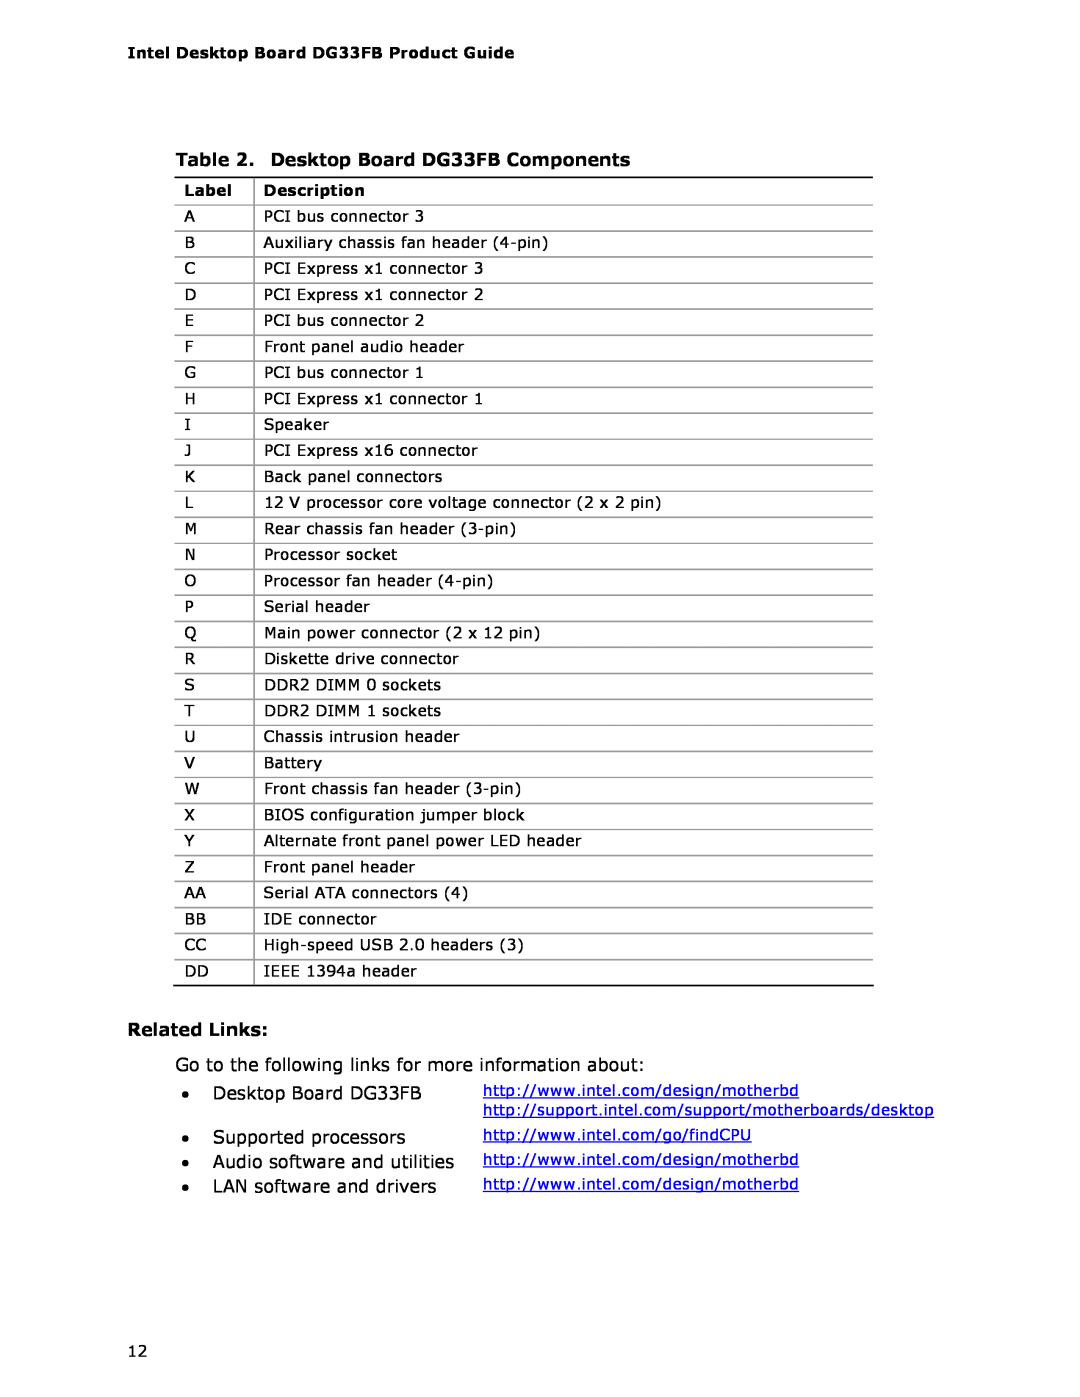 Intel manual Desktop Board DG33FB Components, Related Links 